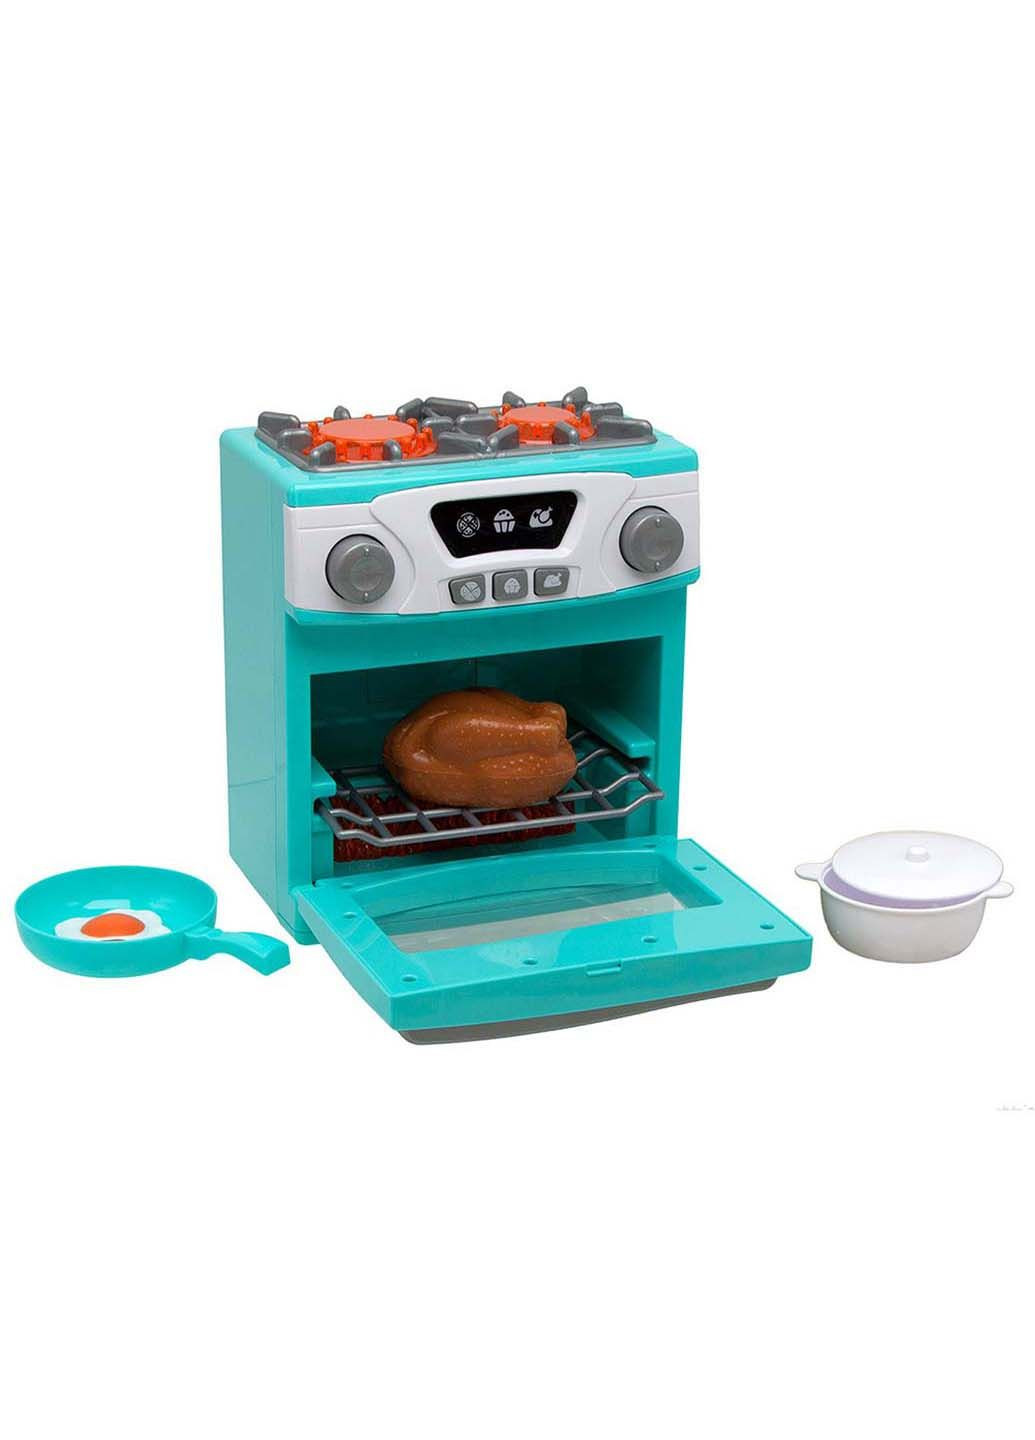 Дитяча кухонна плита Play at Home 20х18х11 см QUN FENG TOYS (280918412)